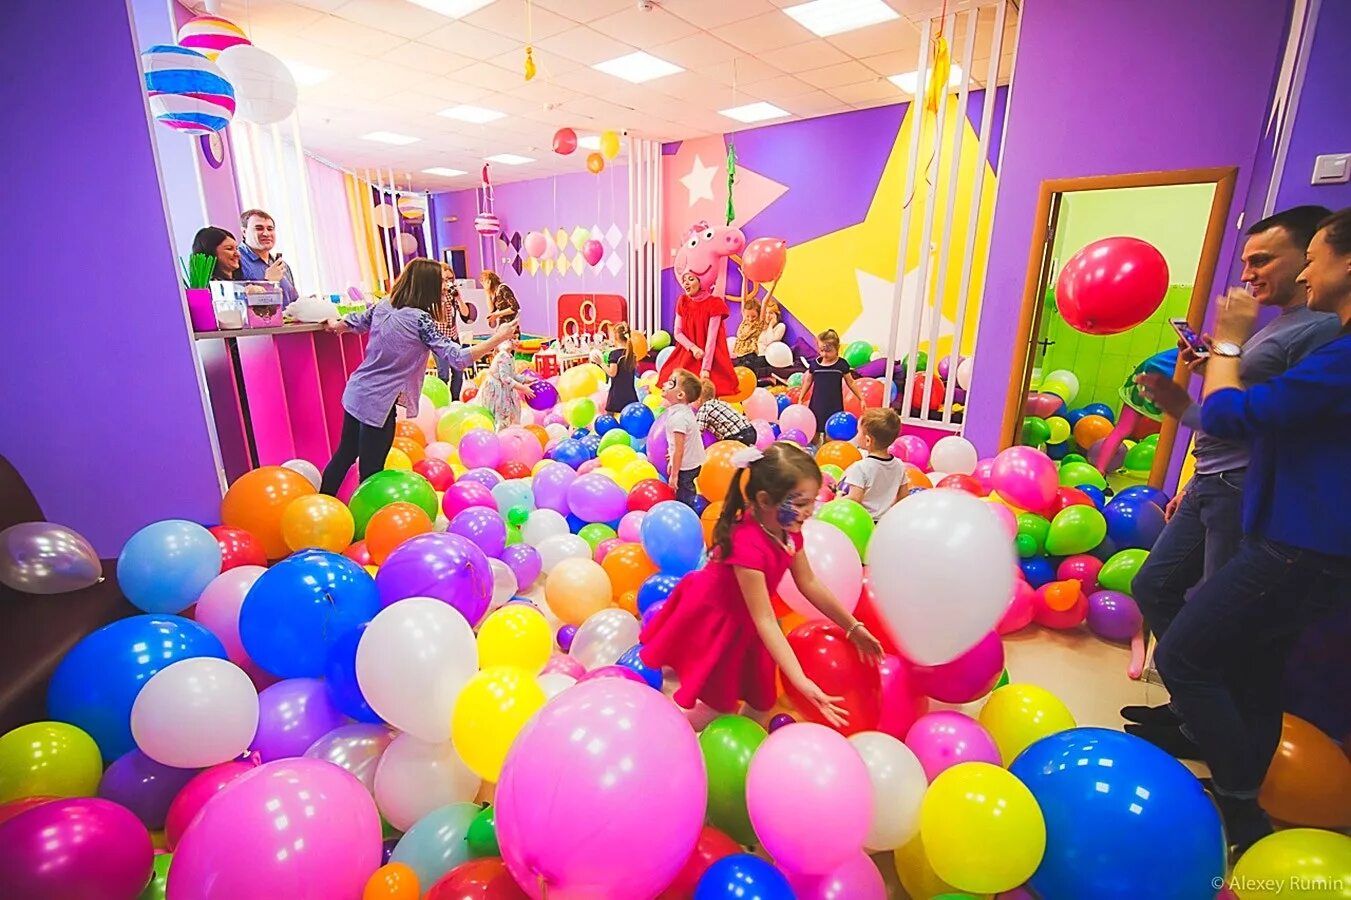 Детский праздник. Шоу шаров на детский праздник. Праздничная комната на день рождения. Детский день рождения. Отметить день рождения ребенка 3 года